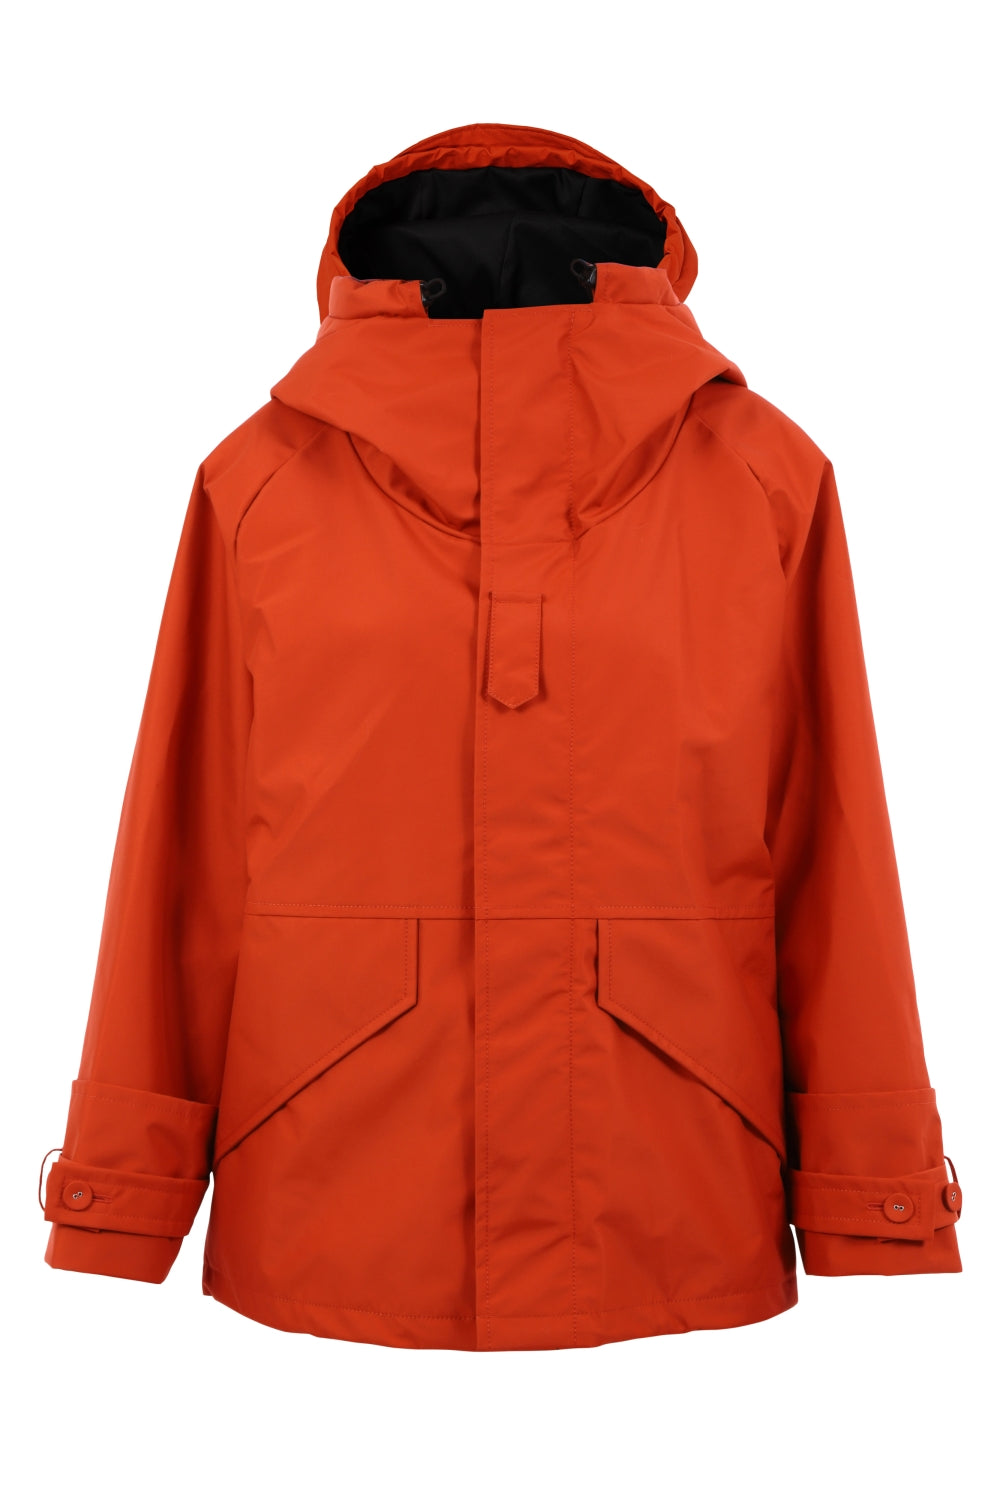 TINY DINOSAUR - Three-Layer Hooded Technical Raincoat  | Orange buy at DOORS NYC